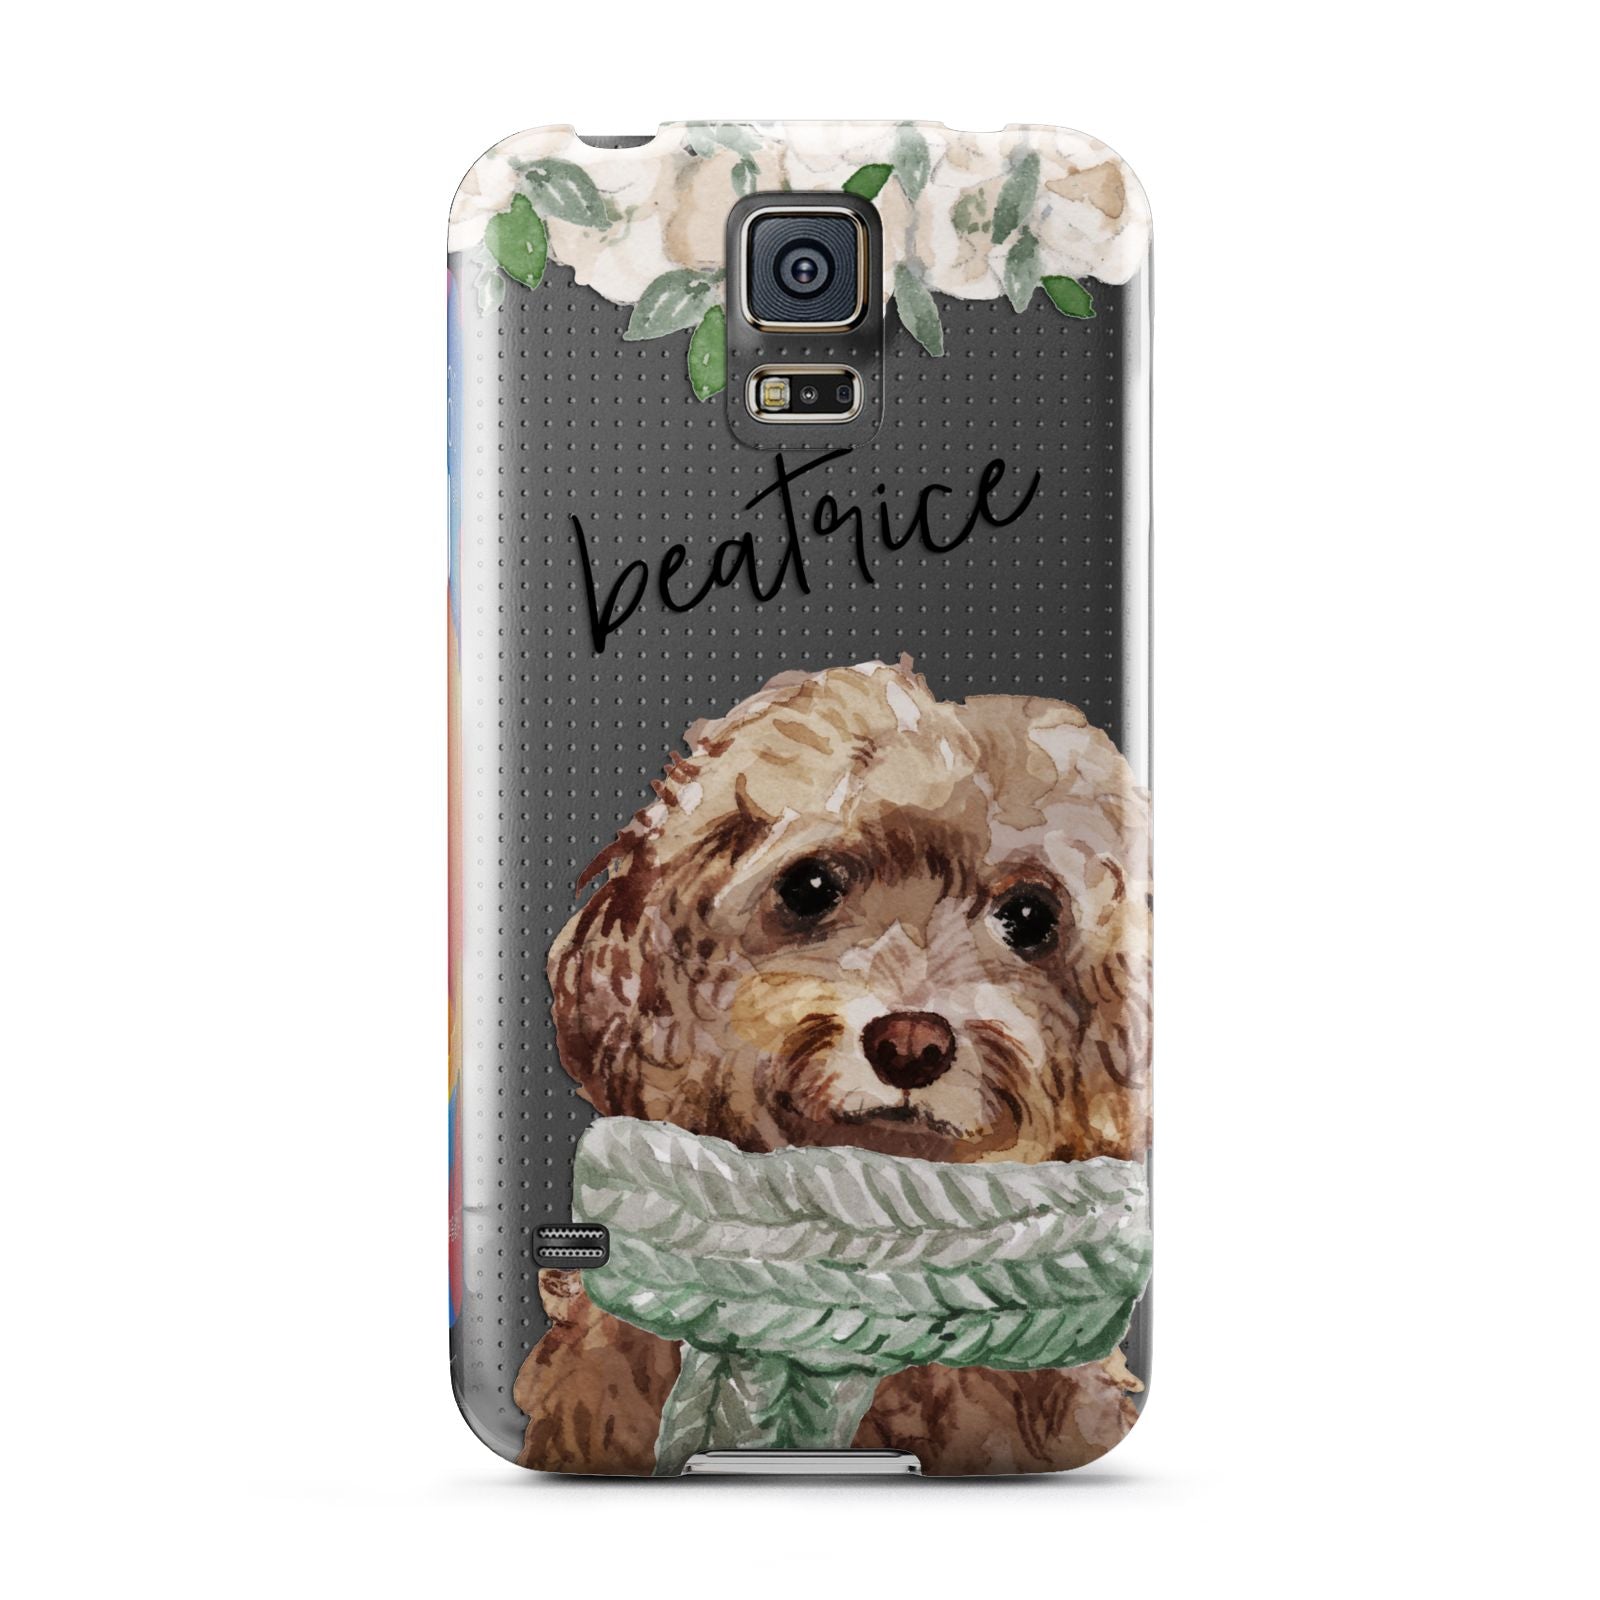 Personalised Cockapoo Dog Samsung Galaxy S5 Case